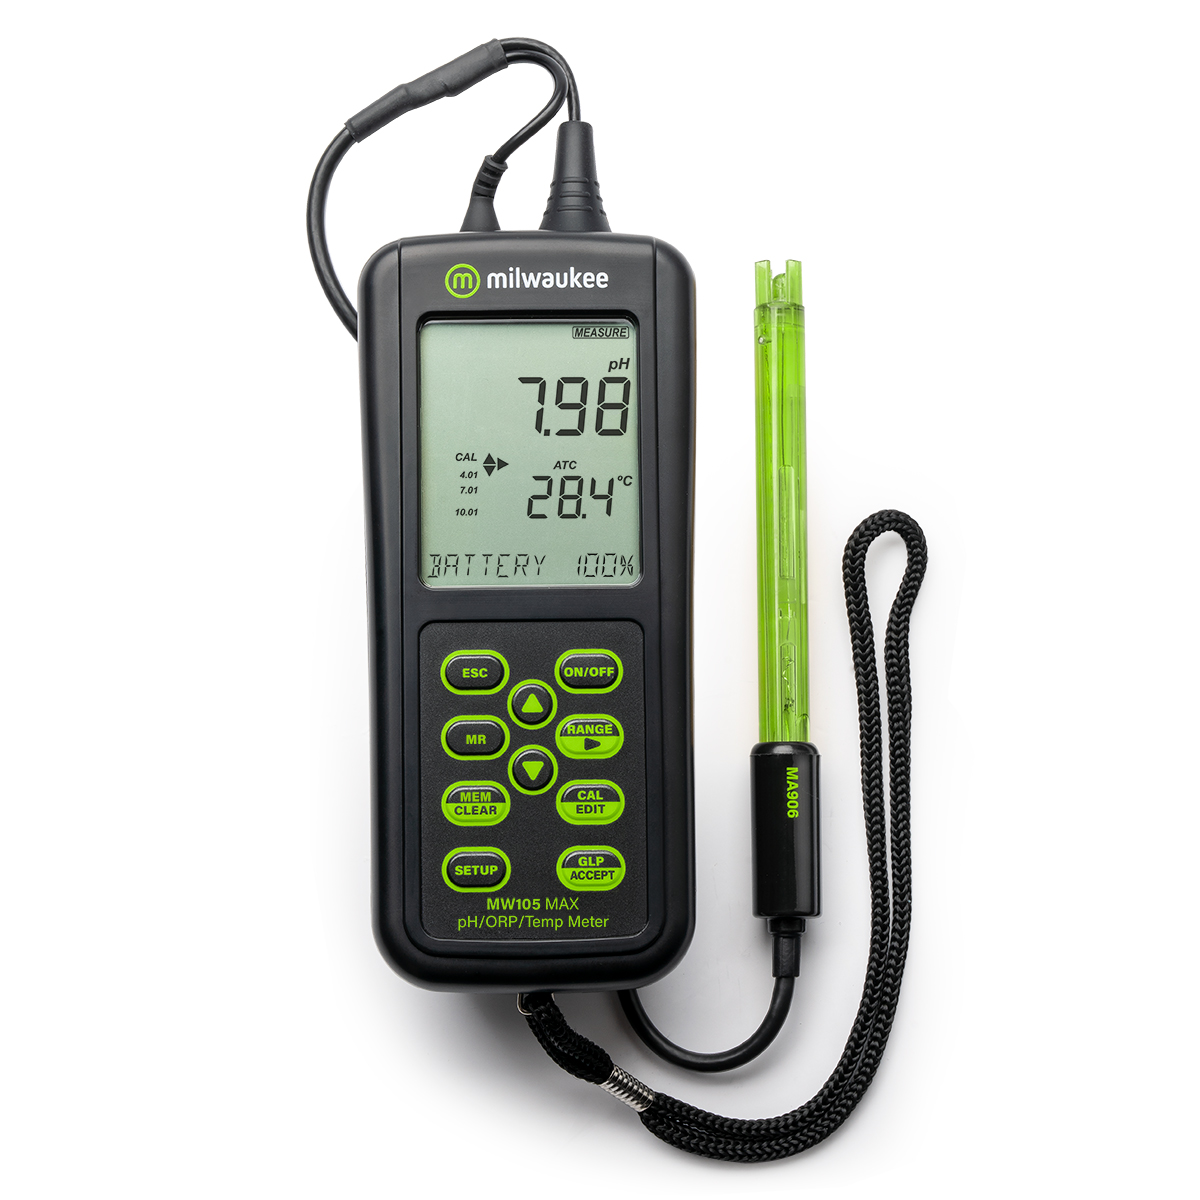 Handheld Pen Style Probe Digital Temperature Meter Food